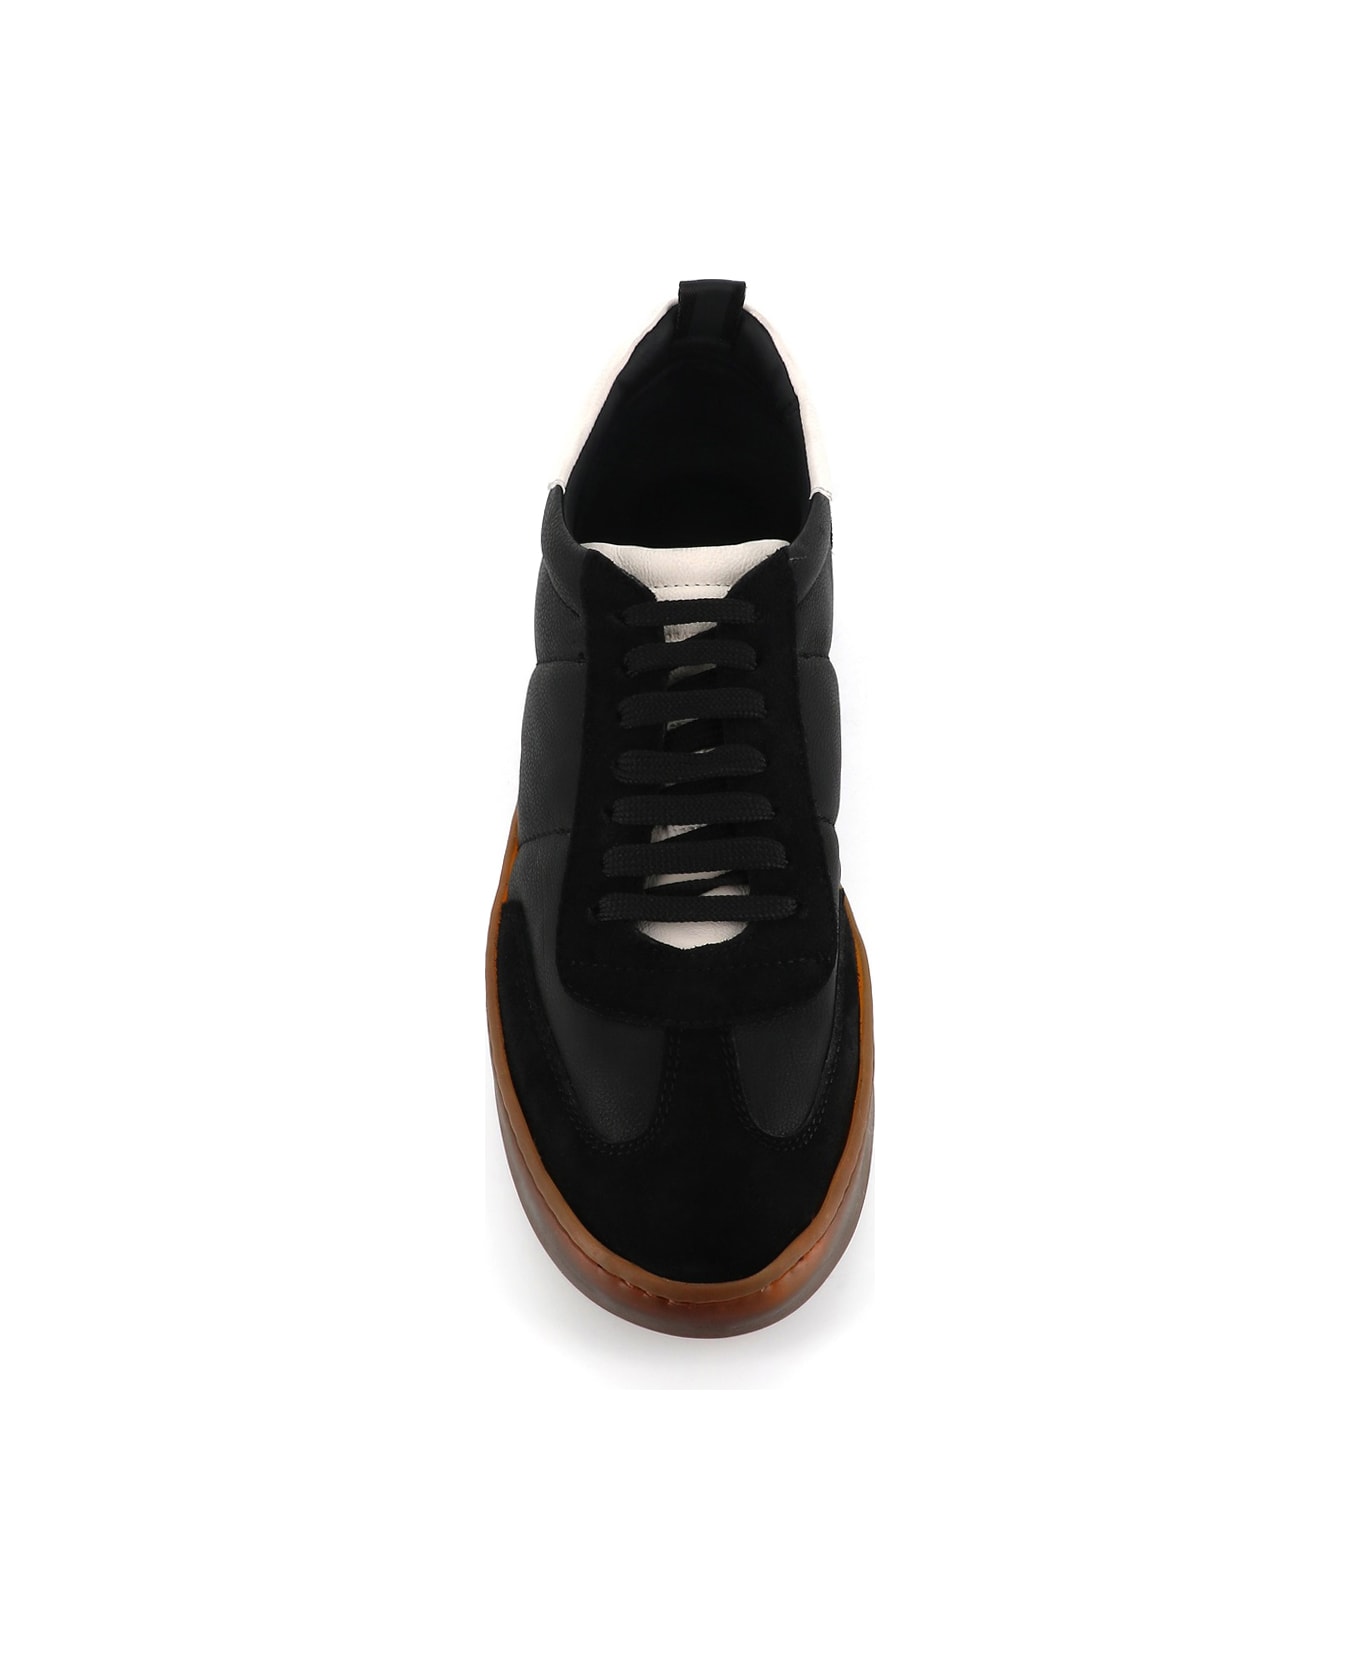 Officine Creative Sneakers Kombined/001 - Black/beige